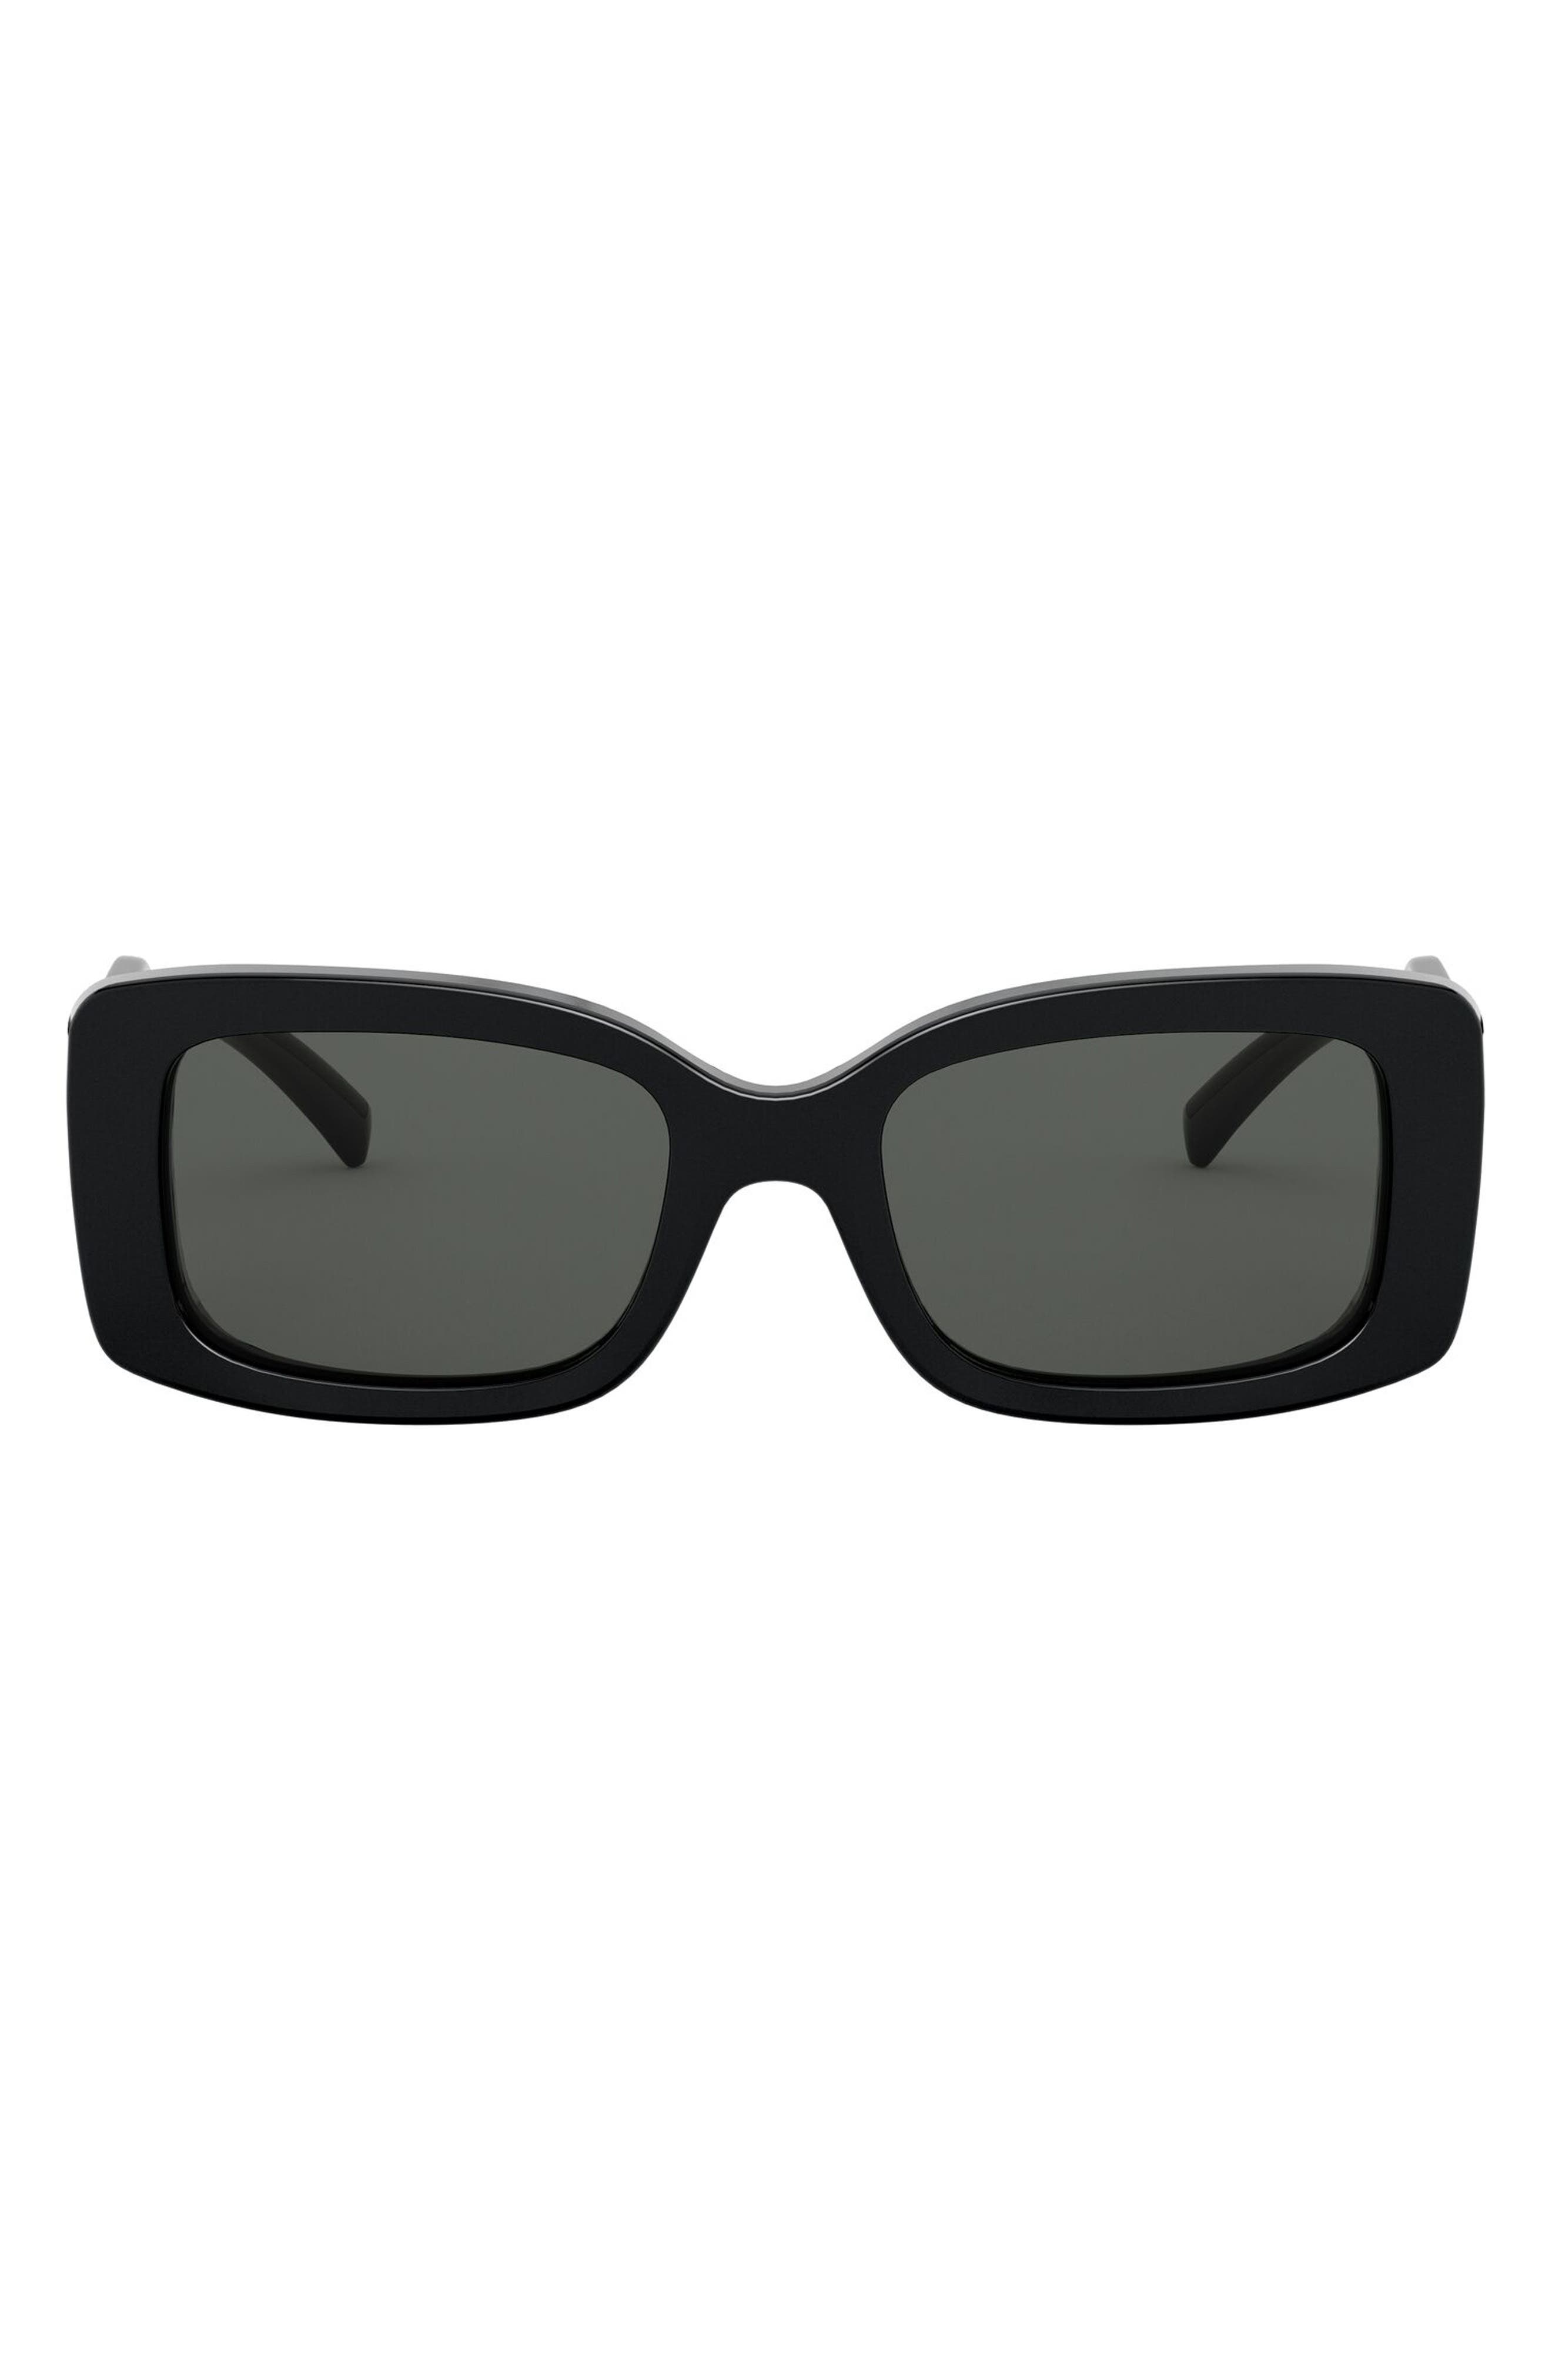 Versace 52mm Sunglasses in Black/Grey Solid